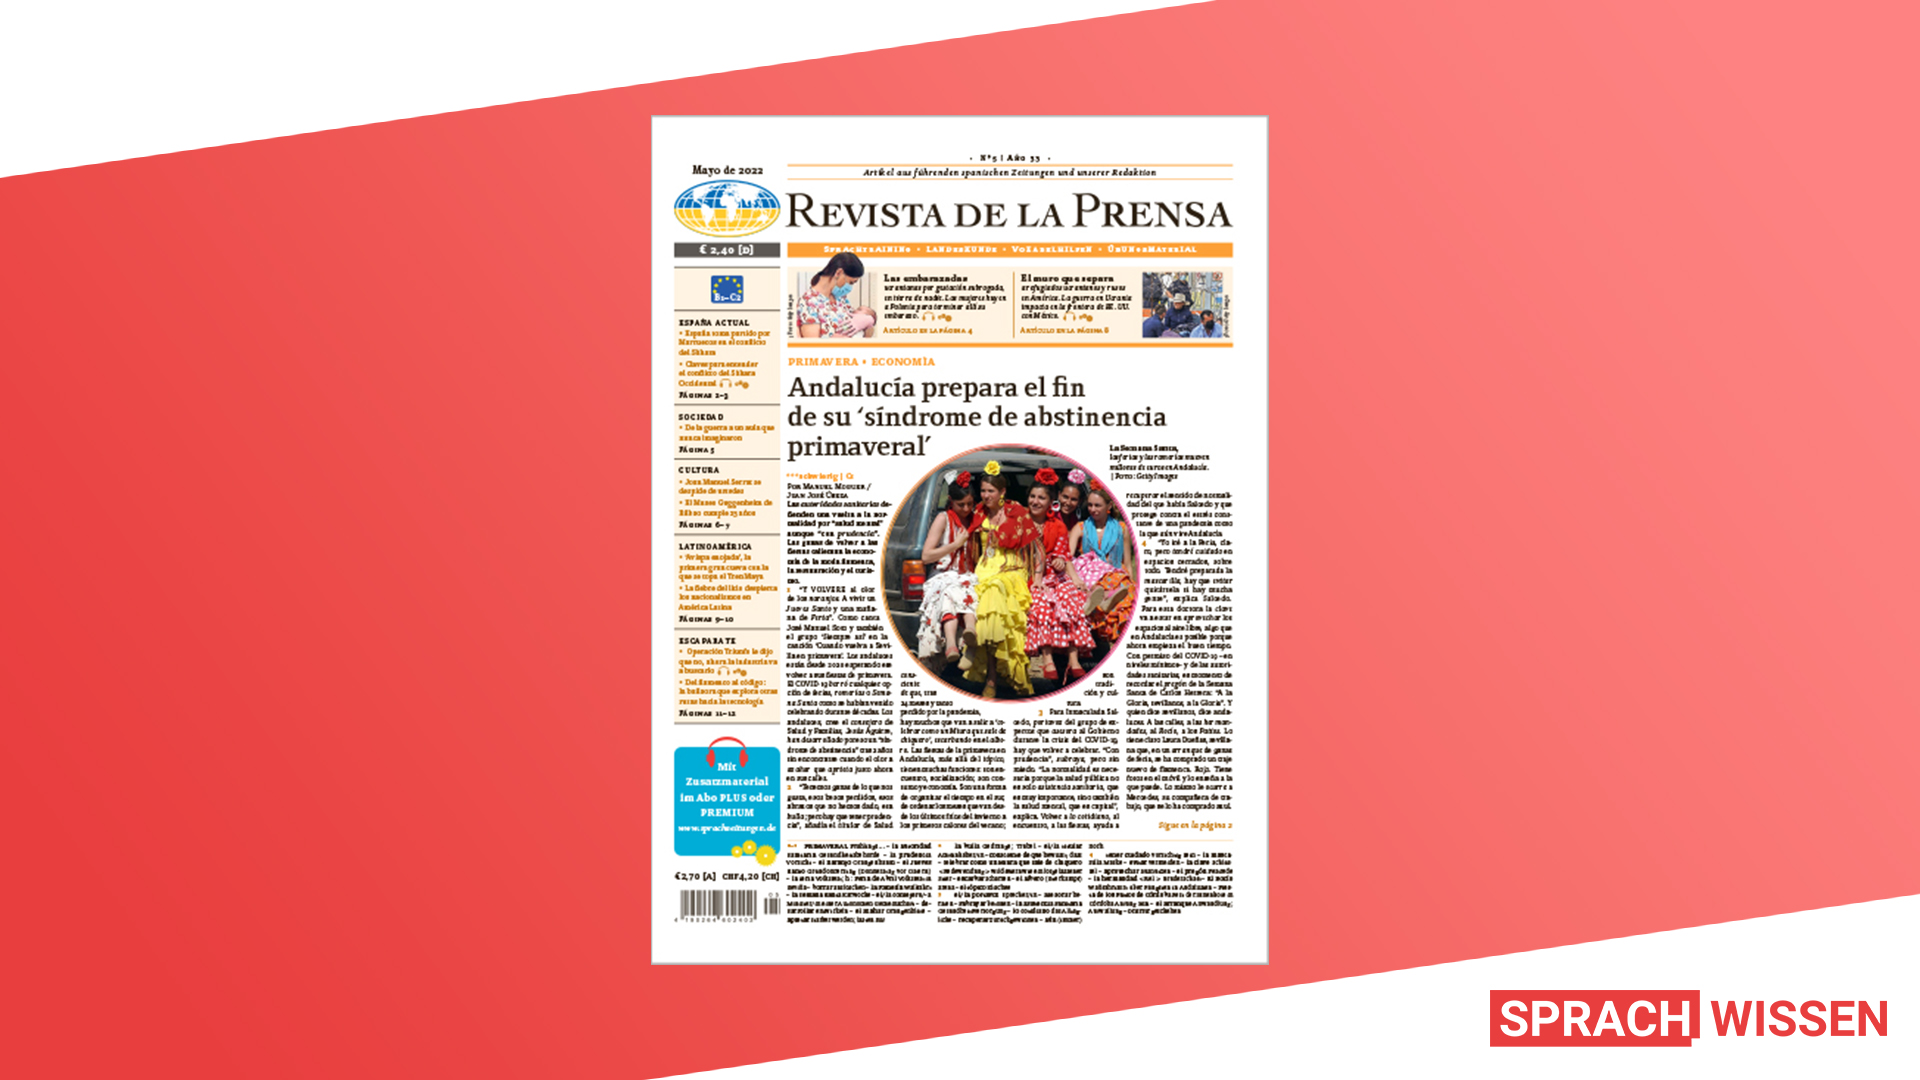 Revista de la Prensa Spanische Sprachzeitung